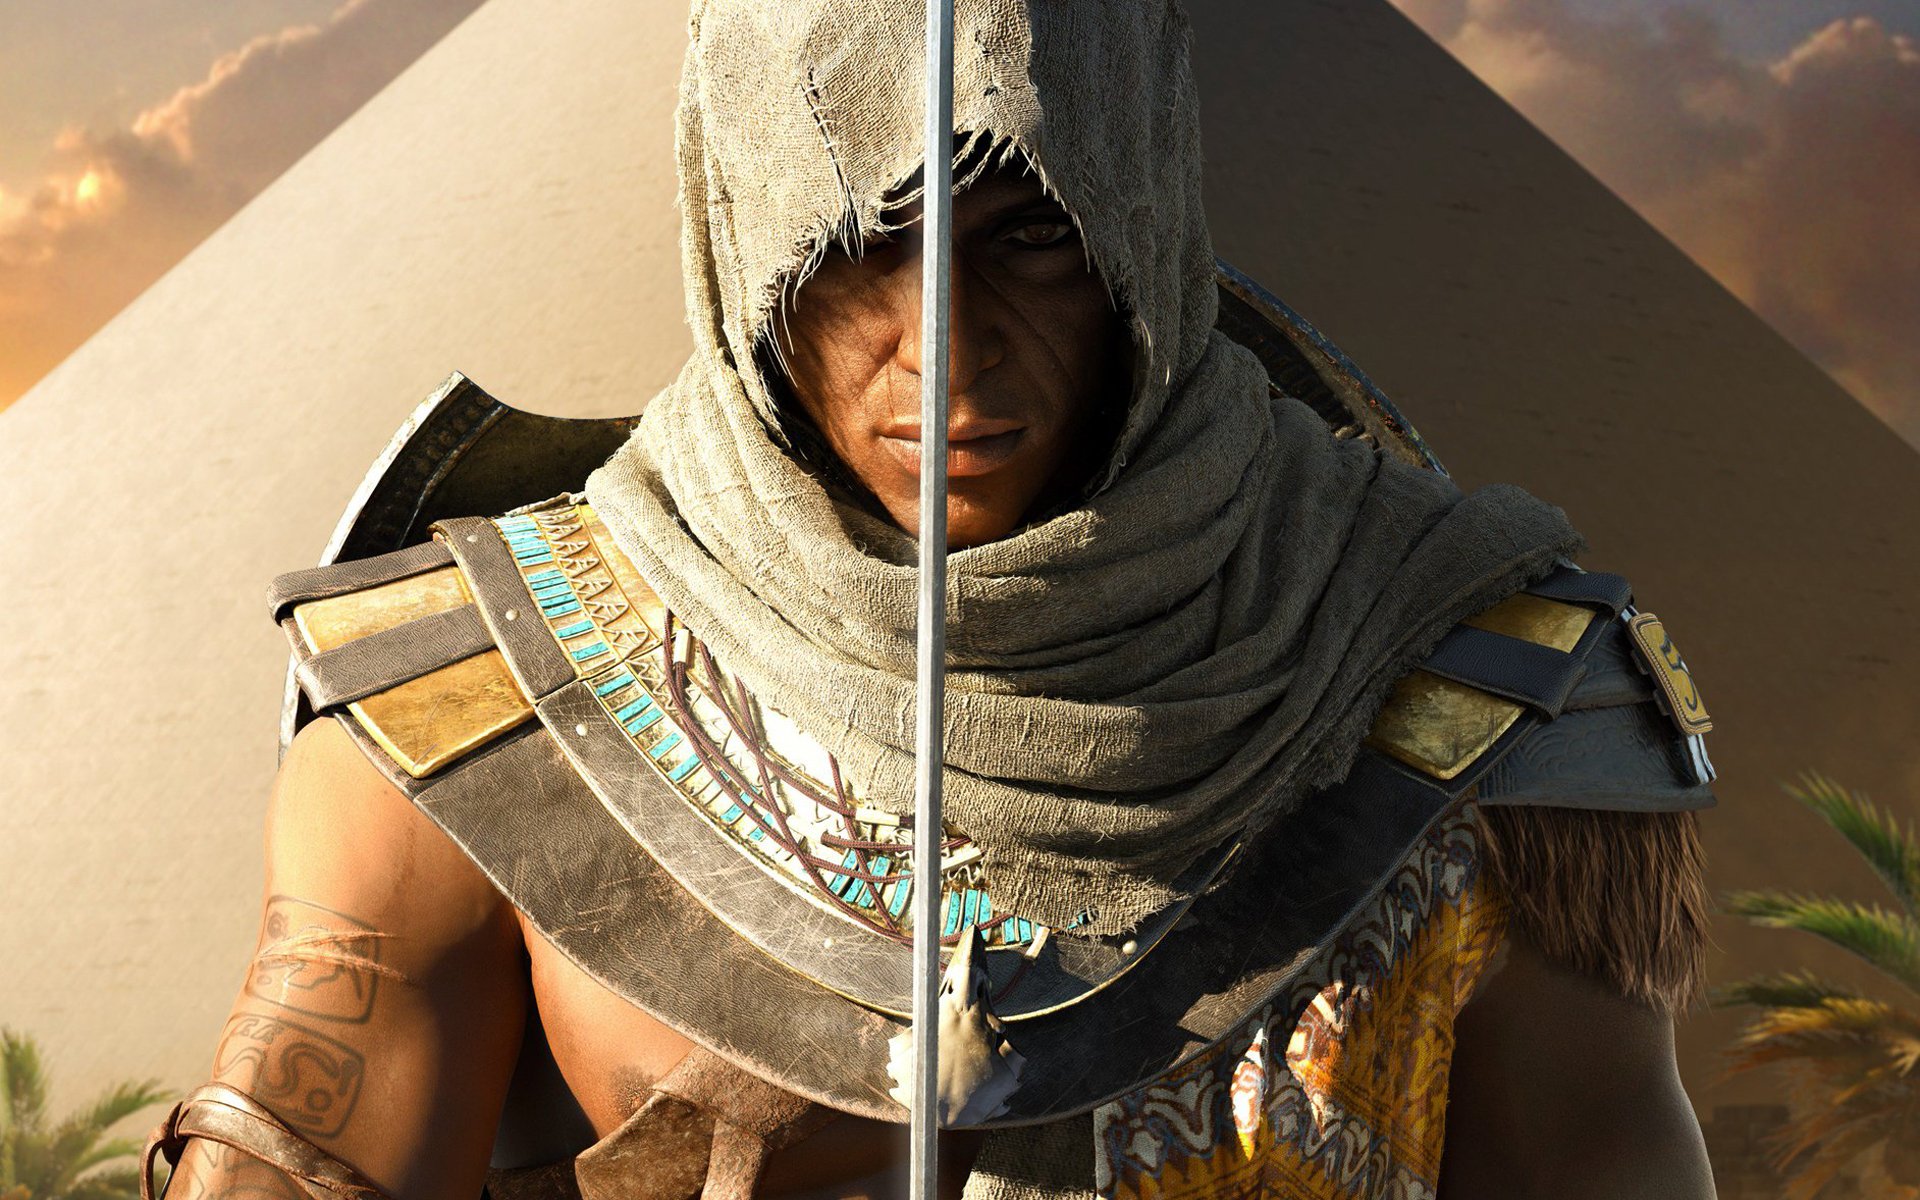 Assassin’s Creed Origins Bayek Of Siwa Wallpaper HD 4k